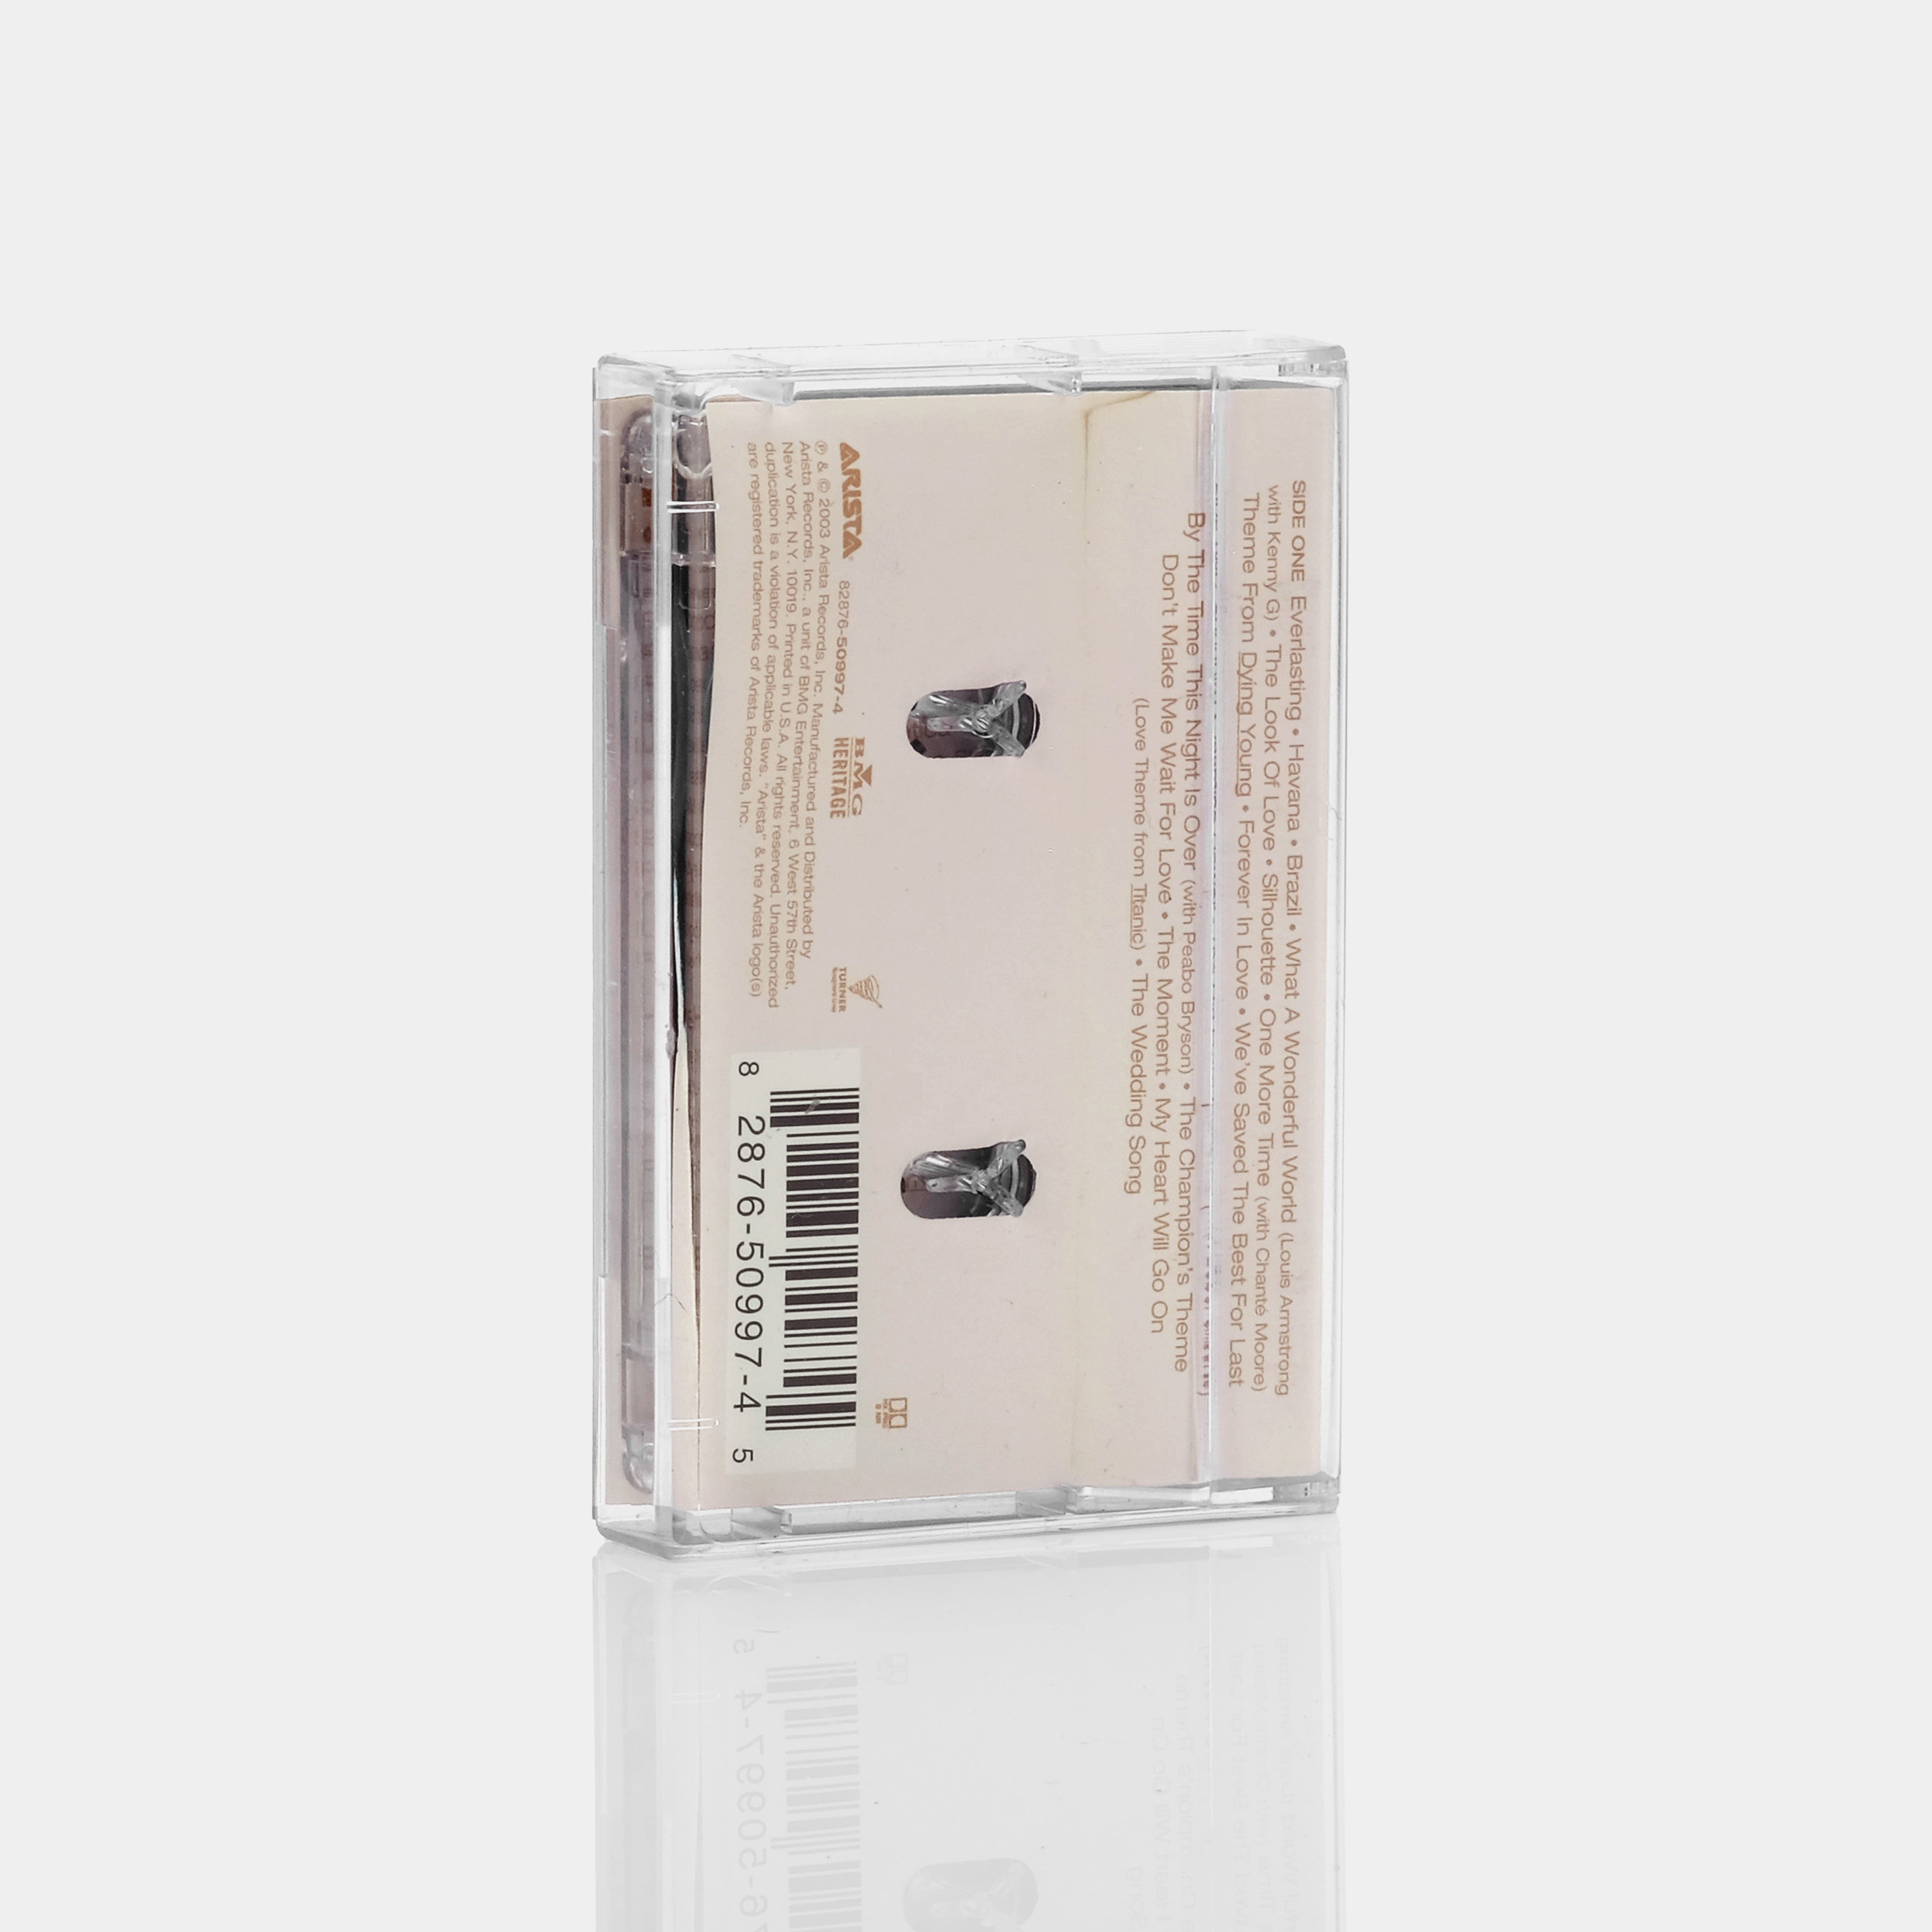 Kenny G - Ultimate Kenny G Cassette Tape